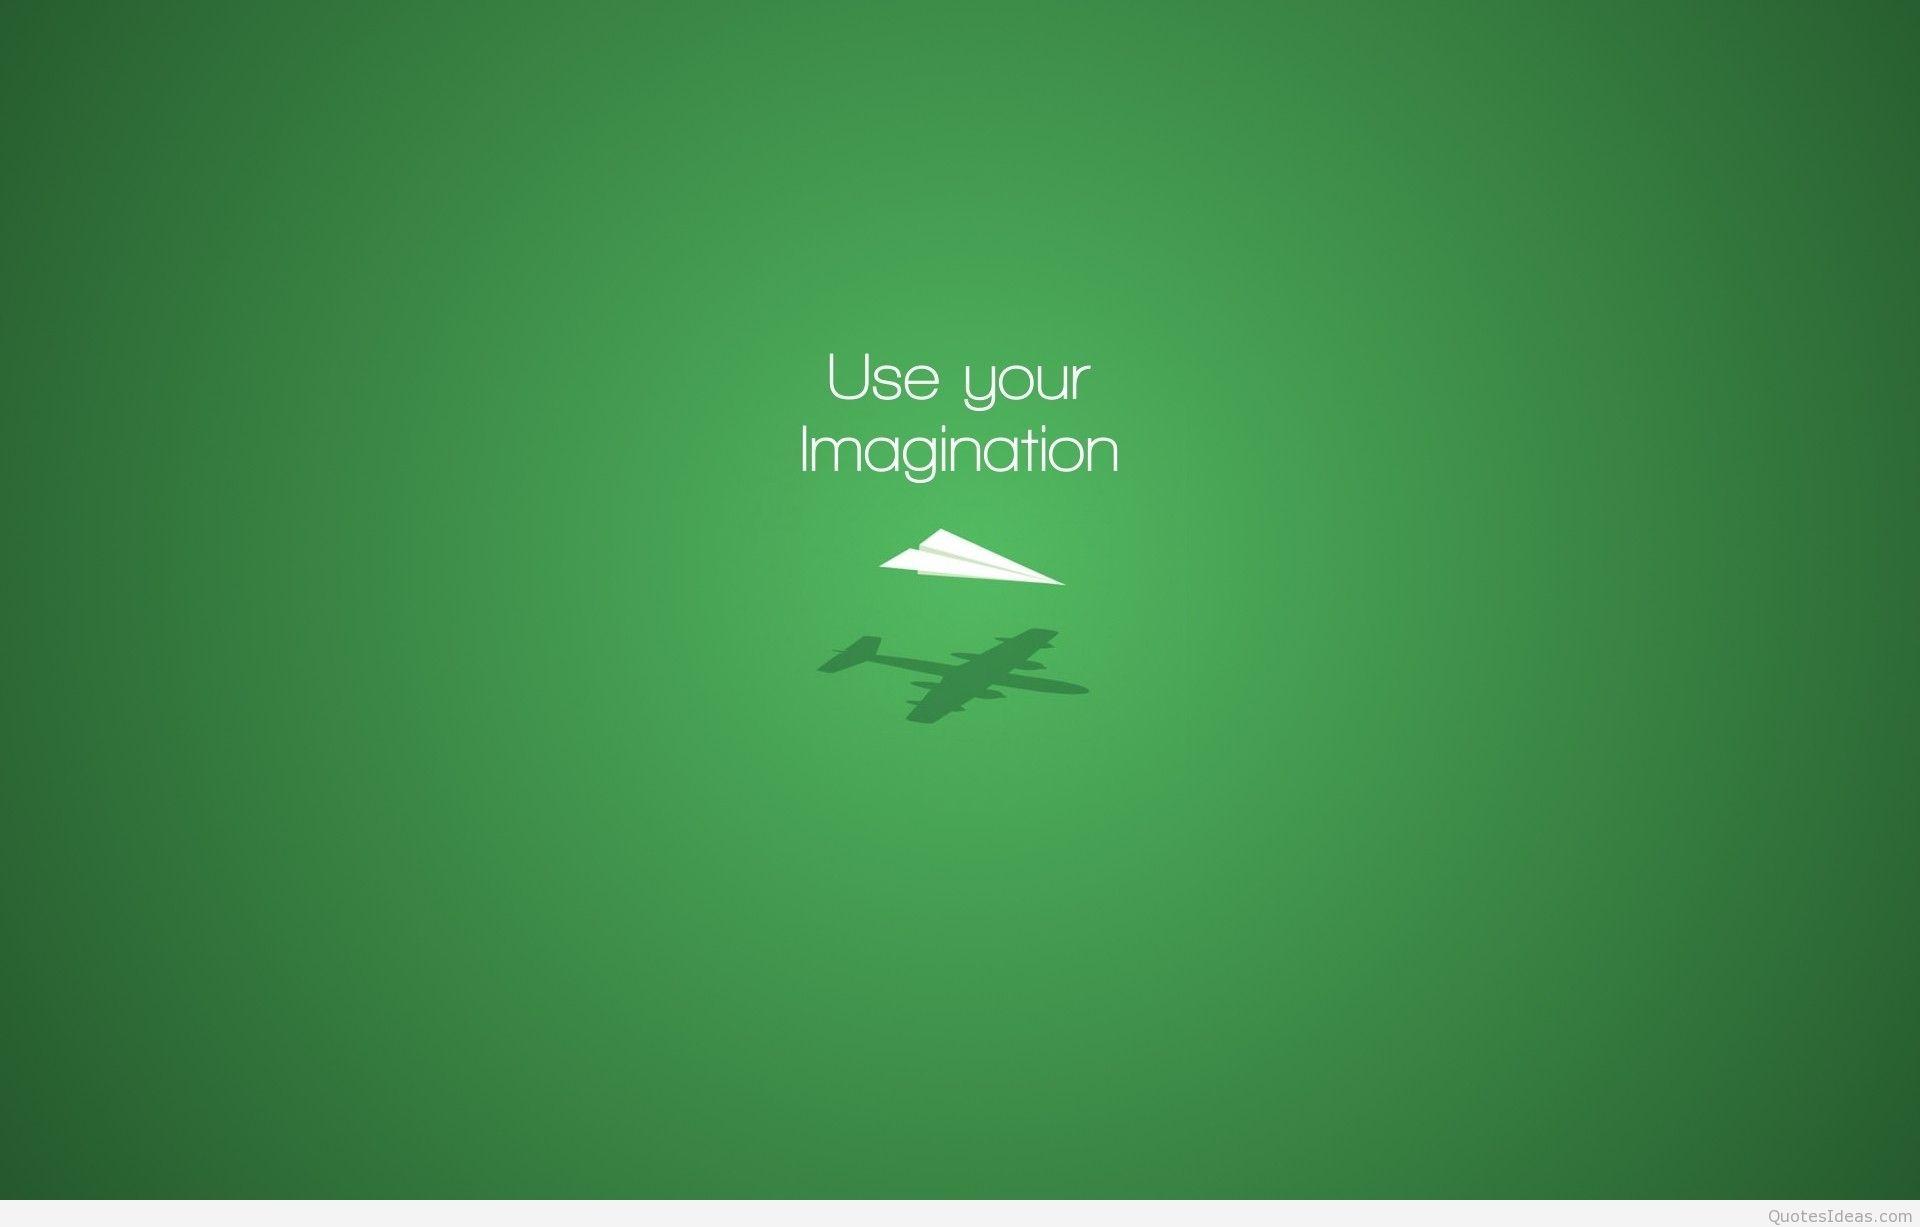 Imagination motivational quote wallpaper hd